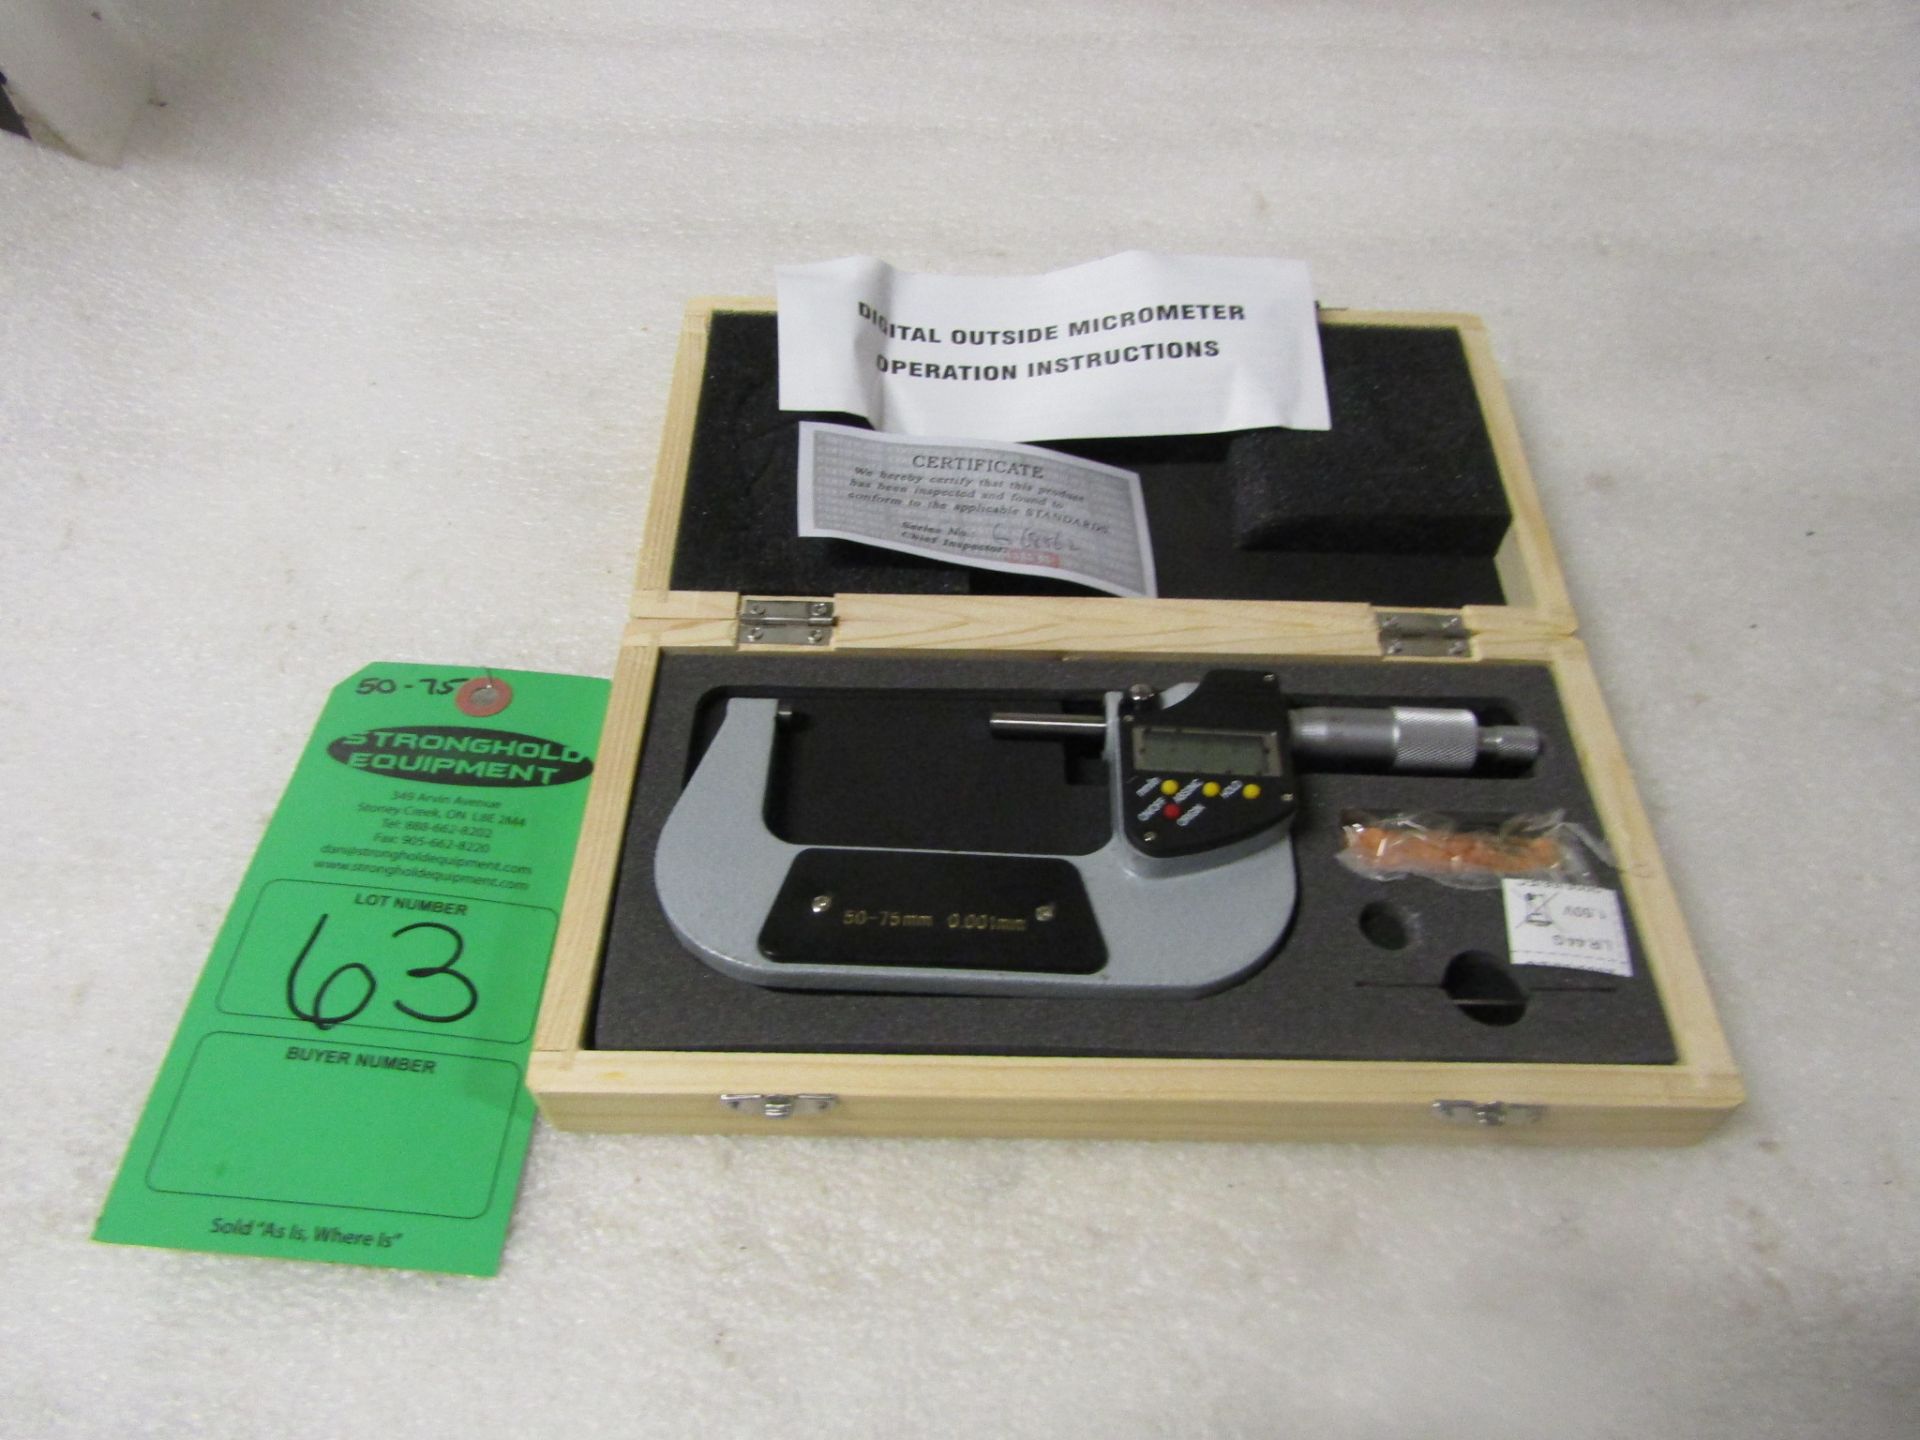 Mint 2-3" / 50-75mm Digital Micrometer in case BRAND NEW